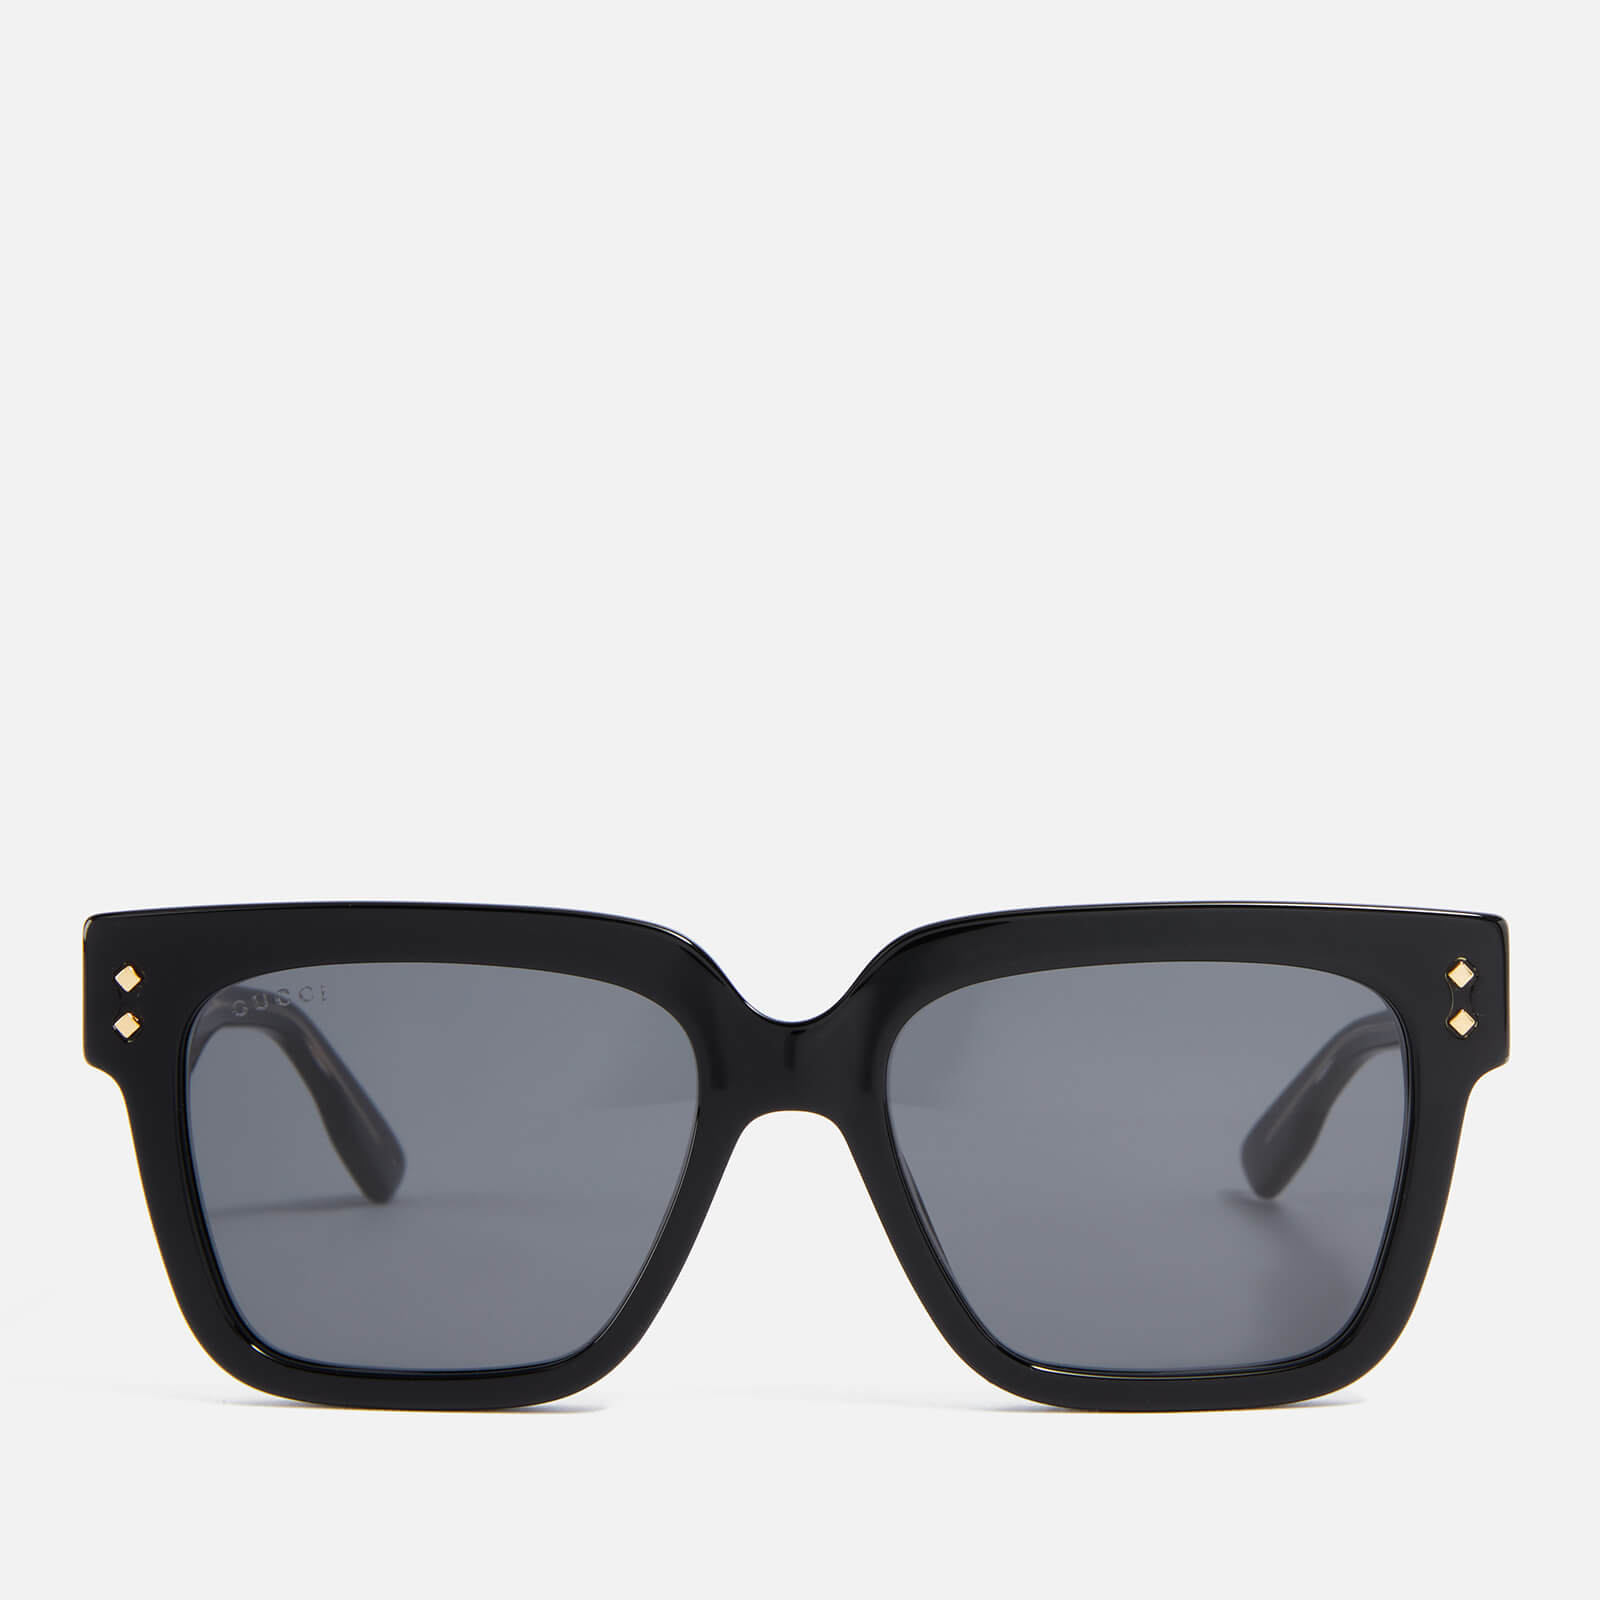 Gucci Men's Acetate Flat Sunglasses - Black/Black/Grey